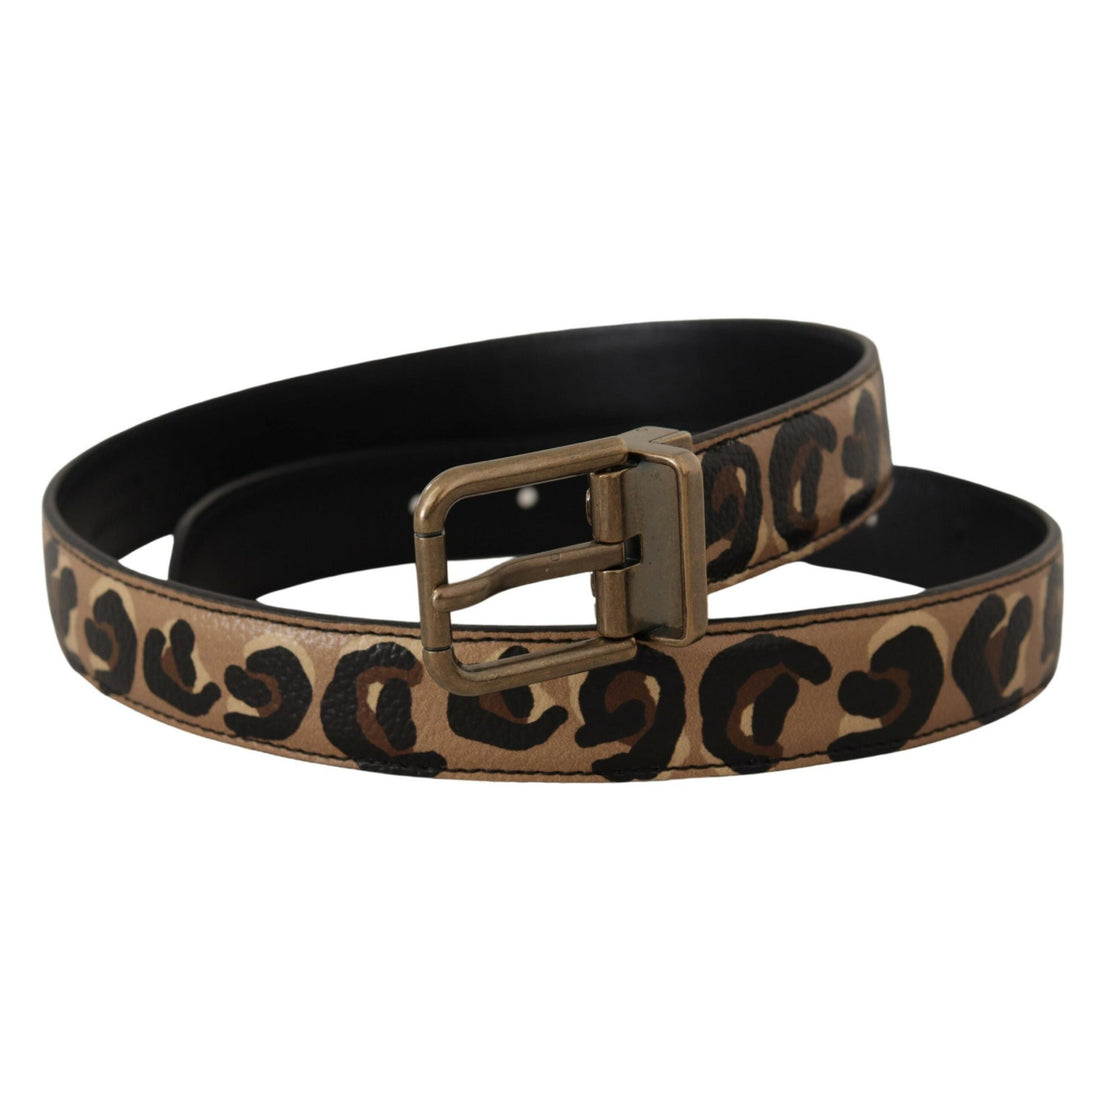 Dolce & Gabbana Brown Leather Leopard Print Bronze Metal Buckle Belt